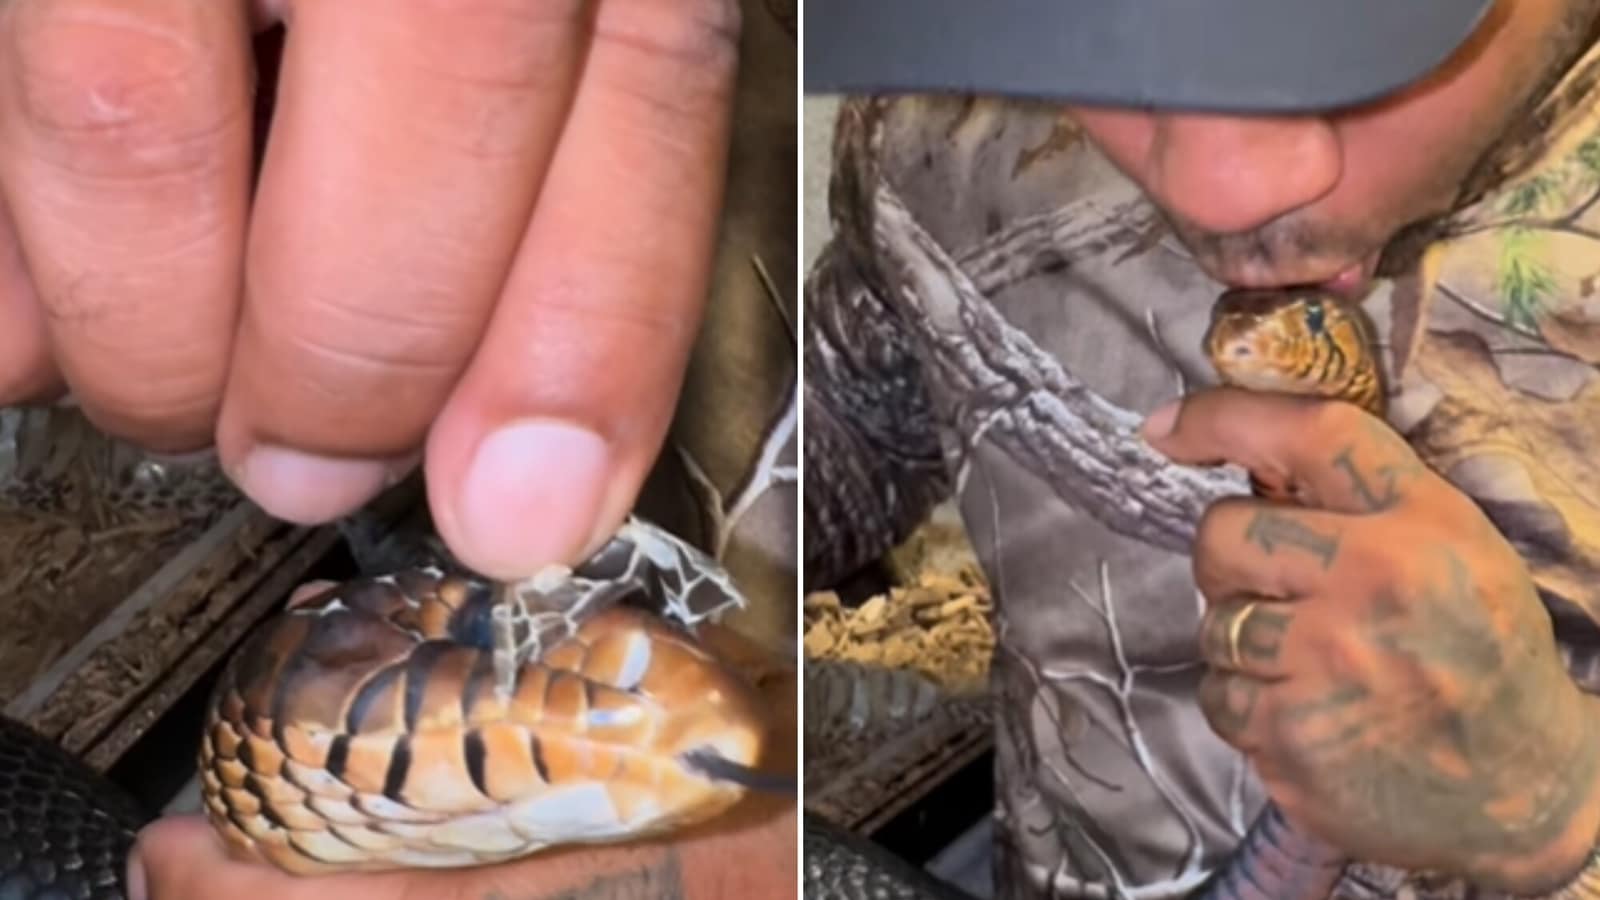 Man kisses snake that ‘enjoys' eating other snakes, helps it shed skin